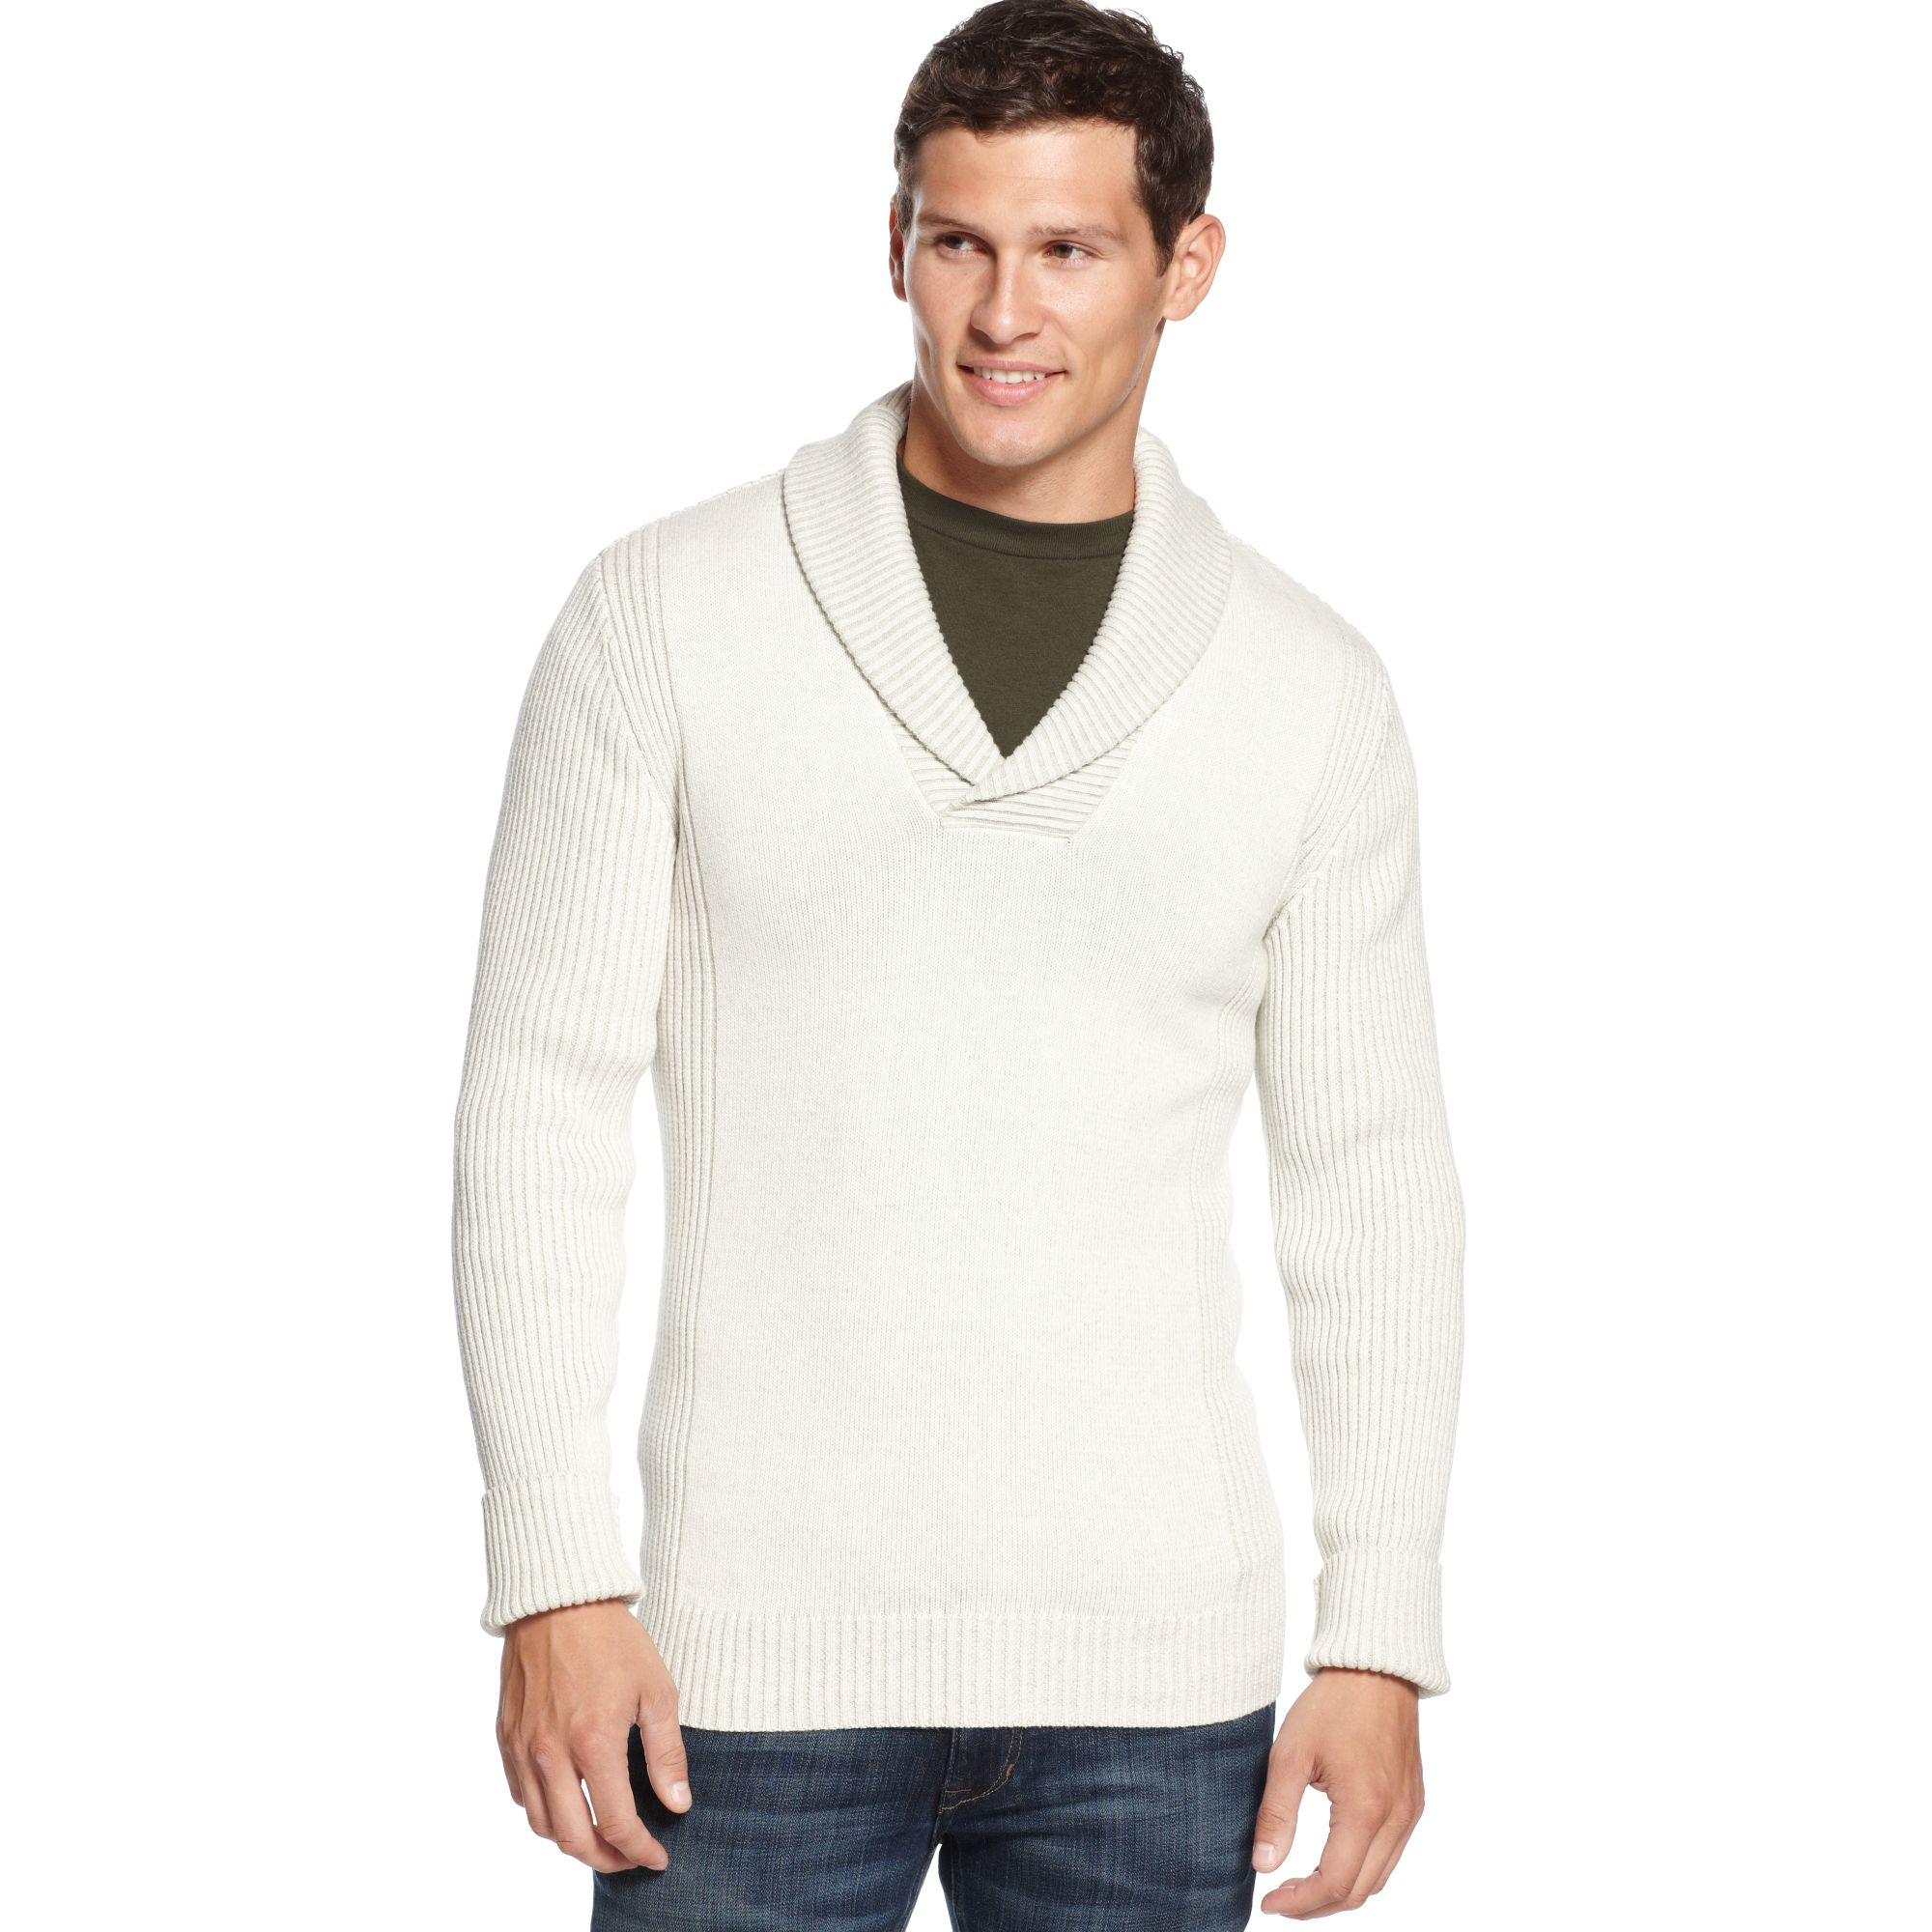 Lyst - American Rag Shawl Collar Sweater in White for Men